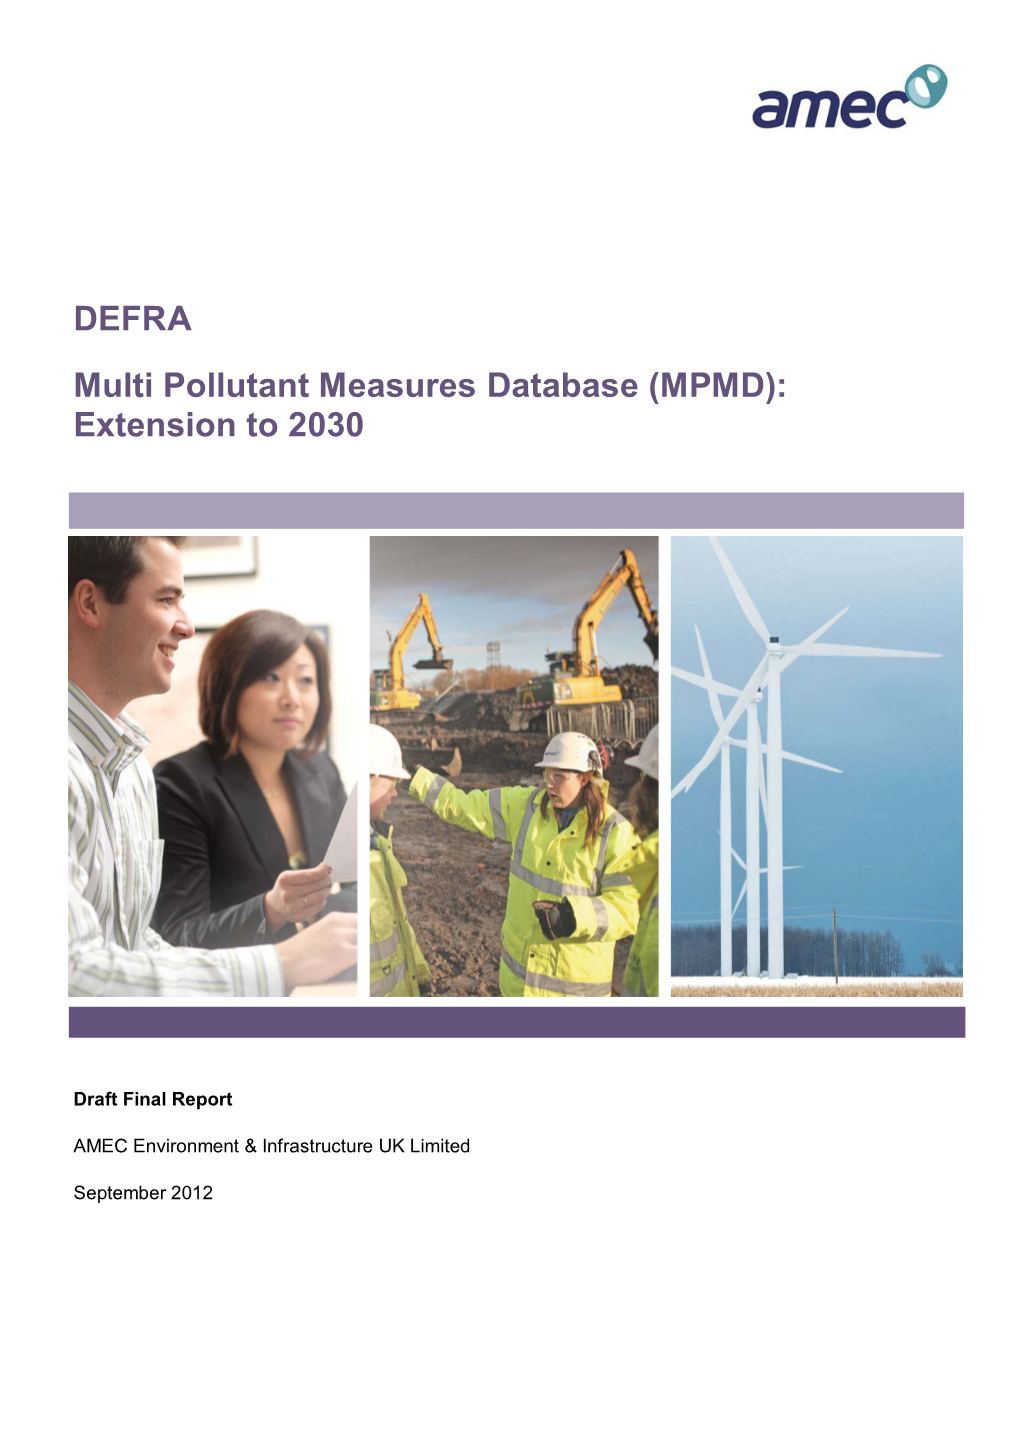 DEFRA Multi Pollutant Measures Database (MPMD): Extension to 2030